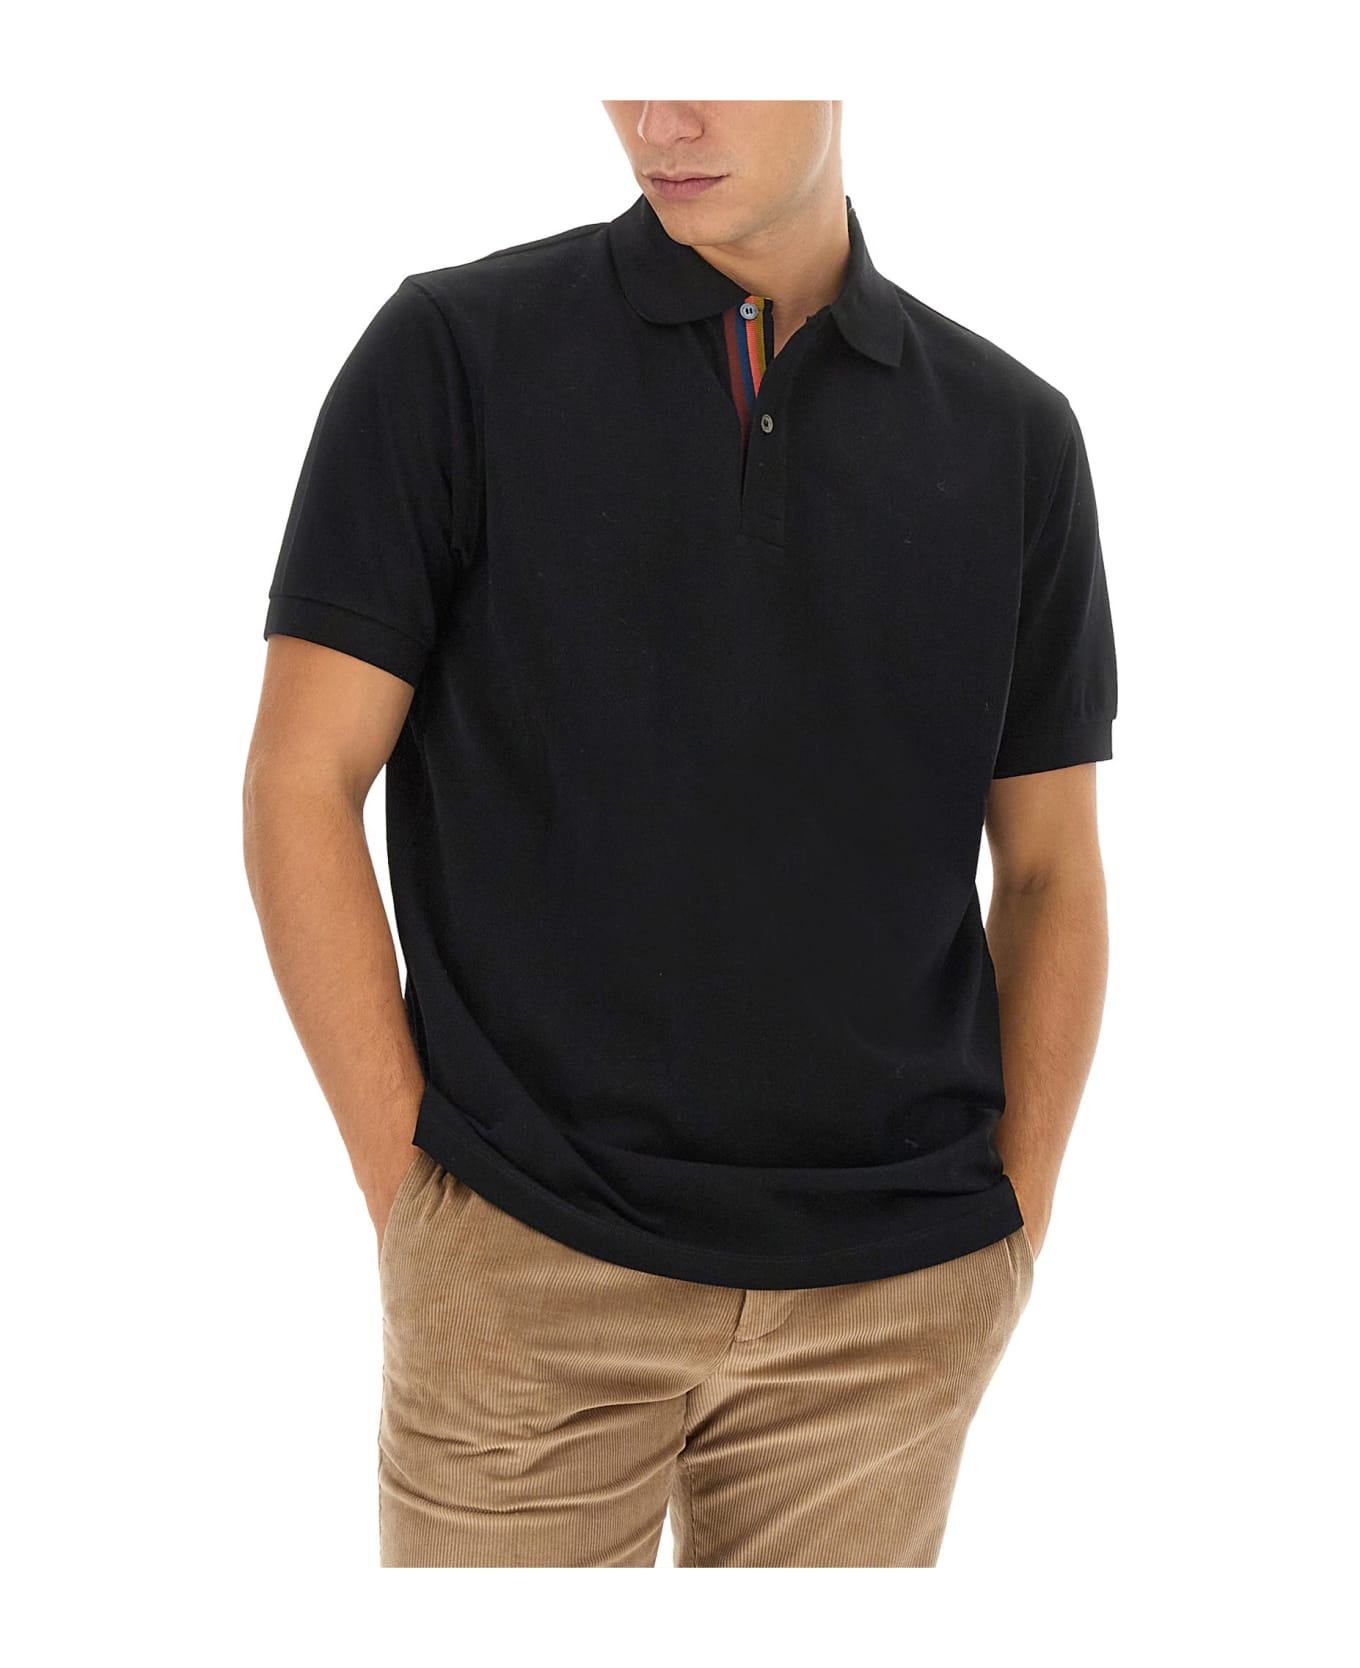 Paul Smith Regular Fit Polo Shirt - BLACK ポロシャツ